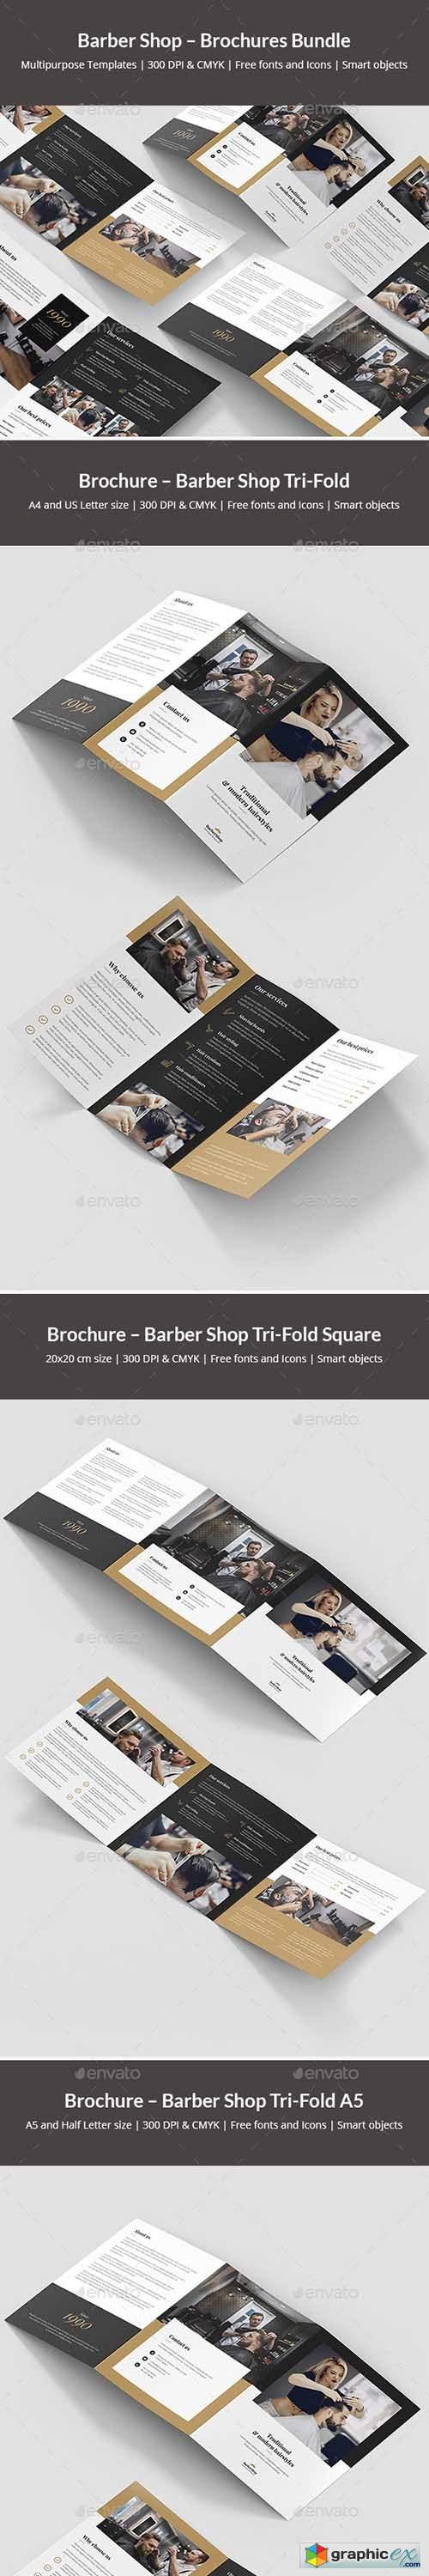 Barber Shop – Brochures Bundle Print Templates 5 in 1